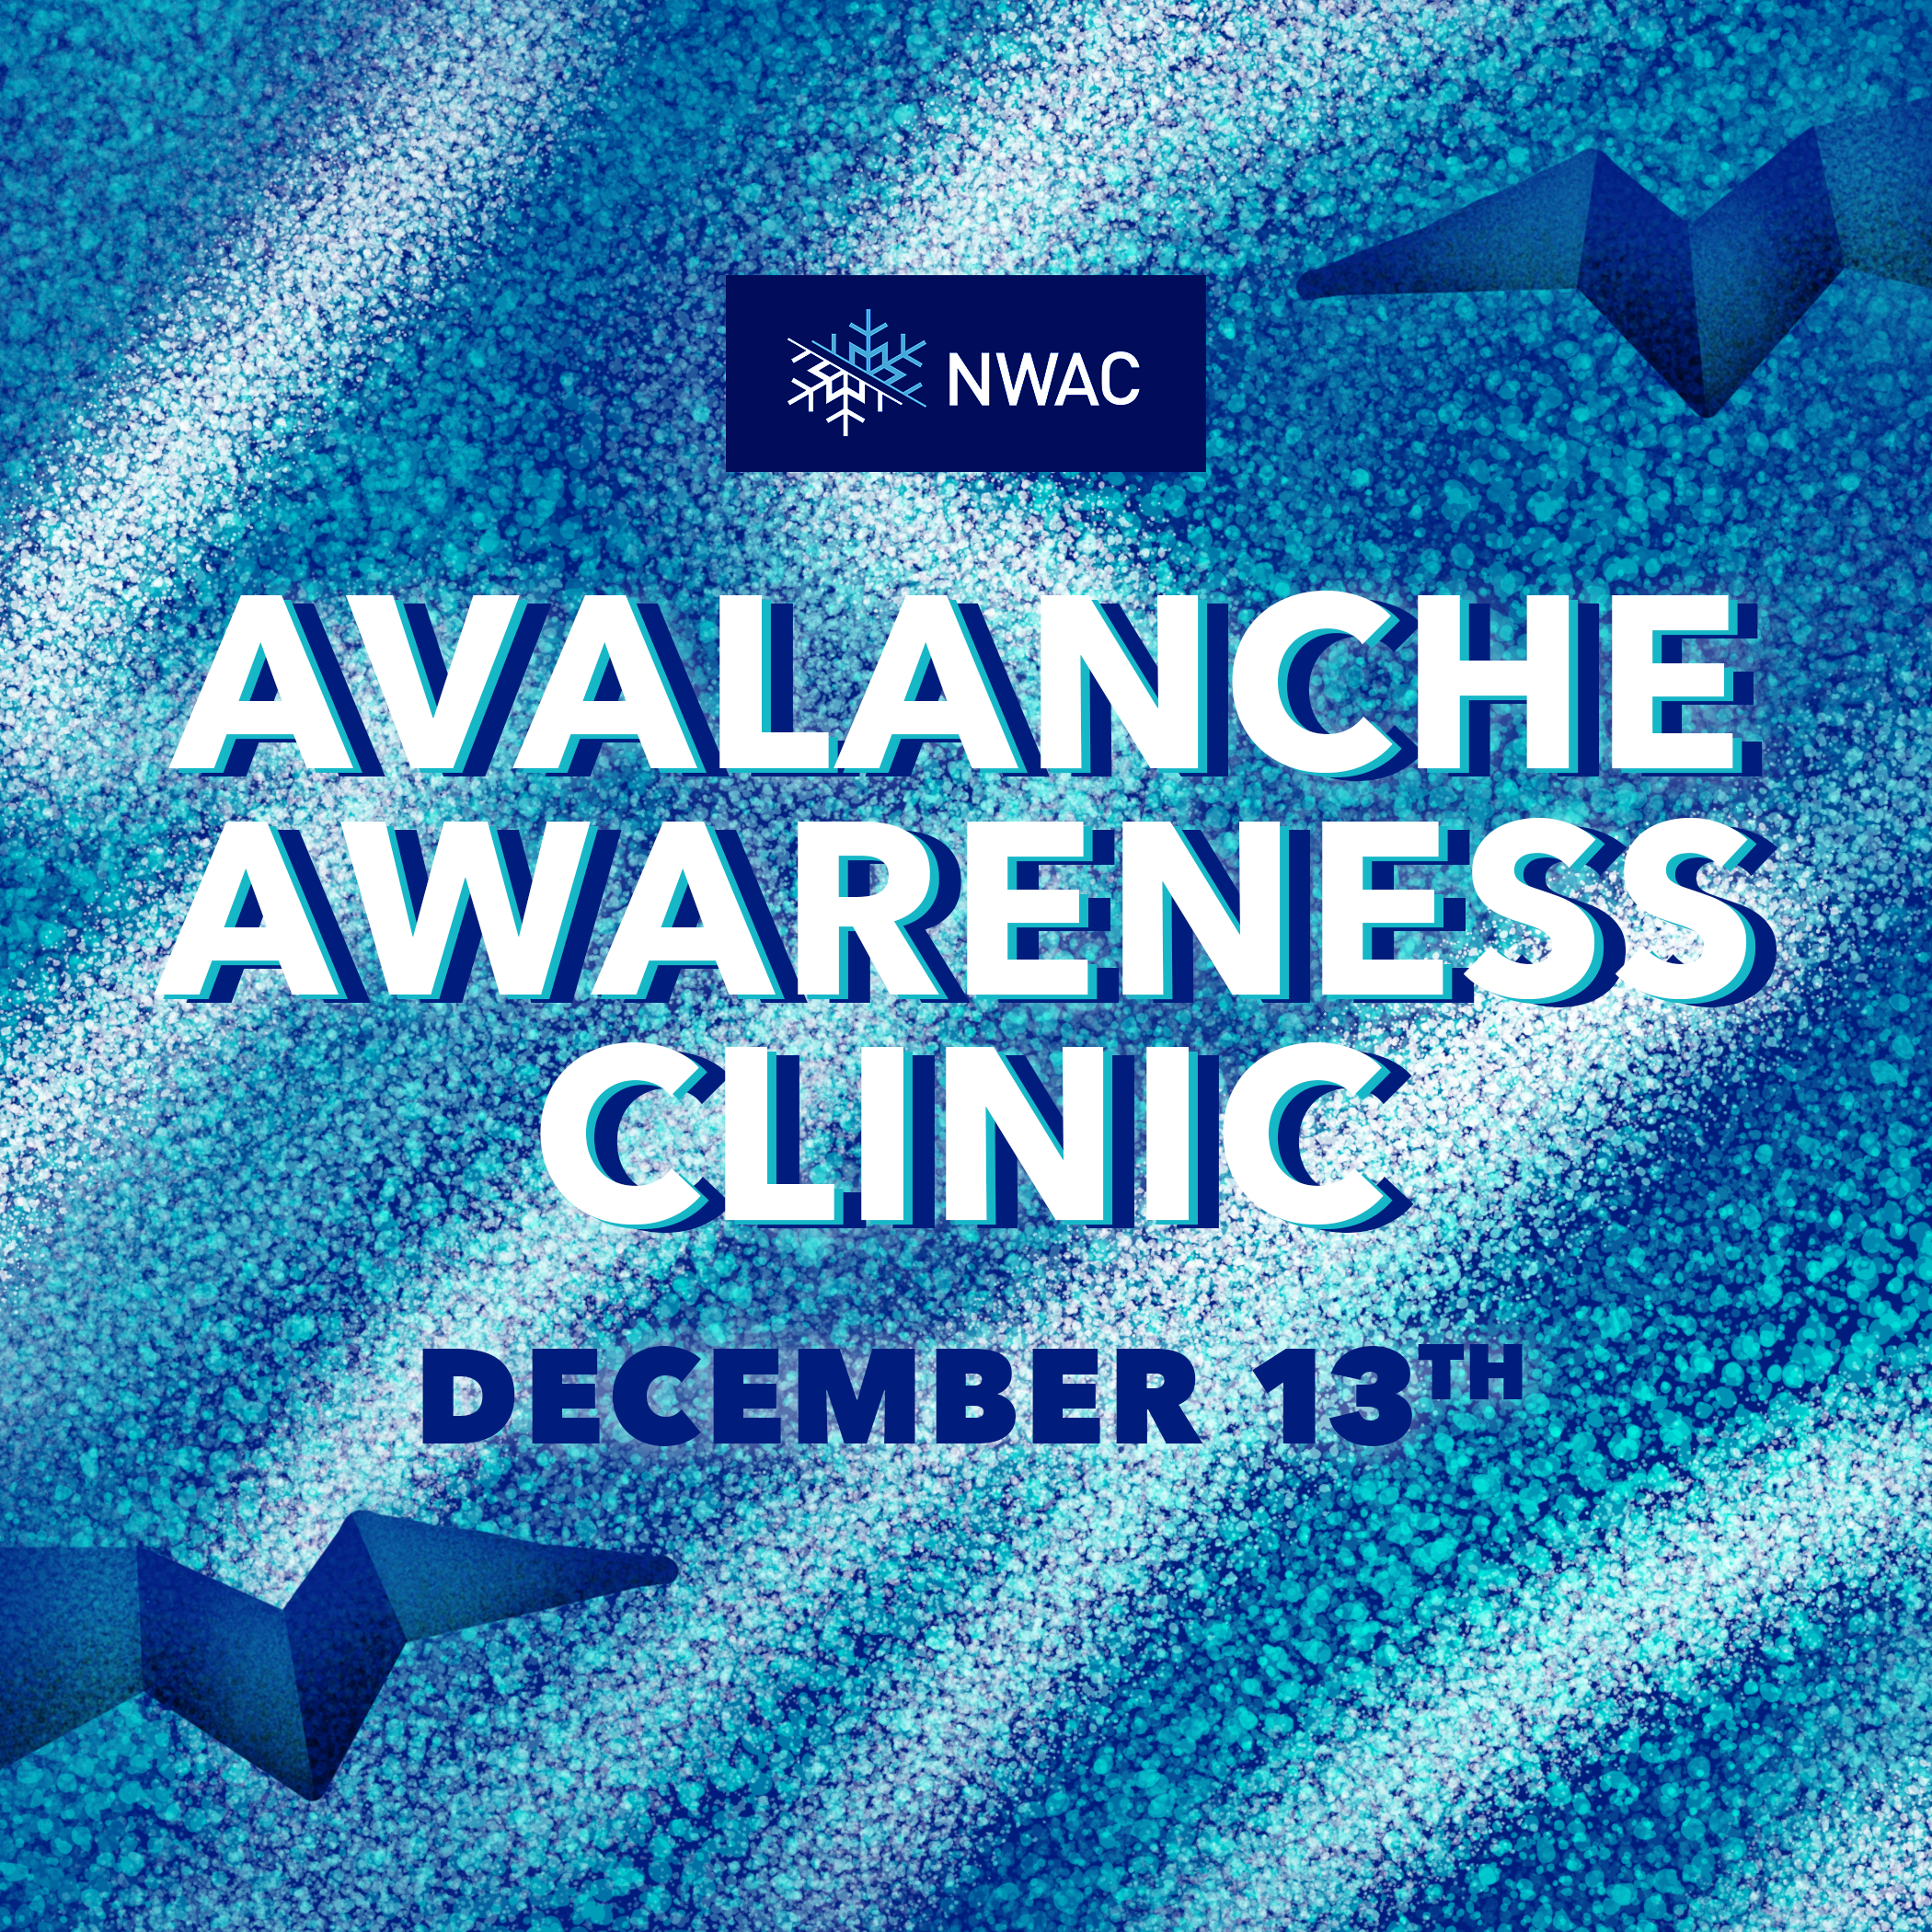 NWAC Avalanche Awareness Clinic | Virtual Presentation